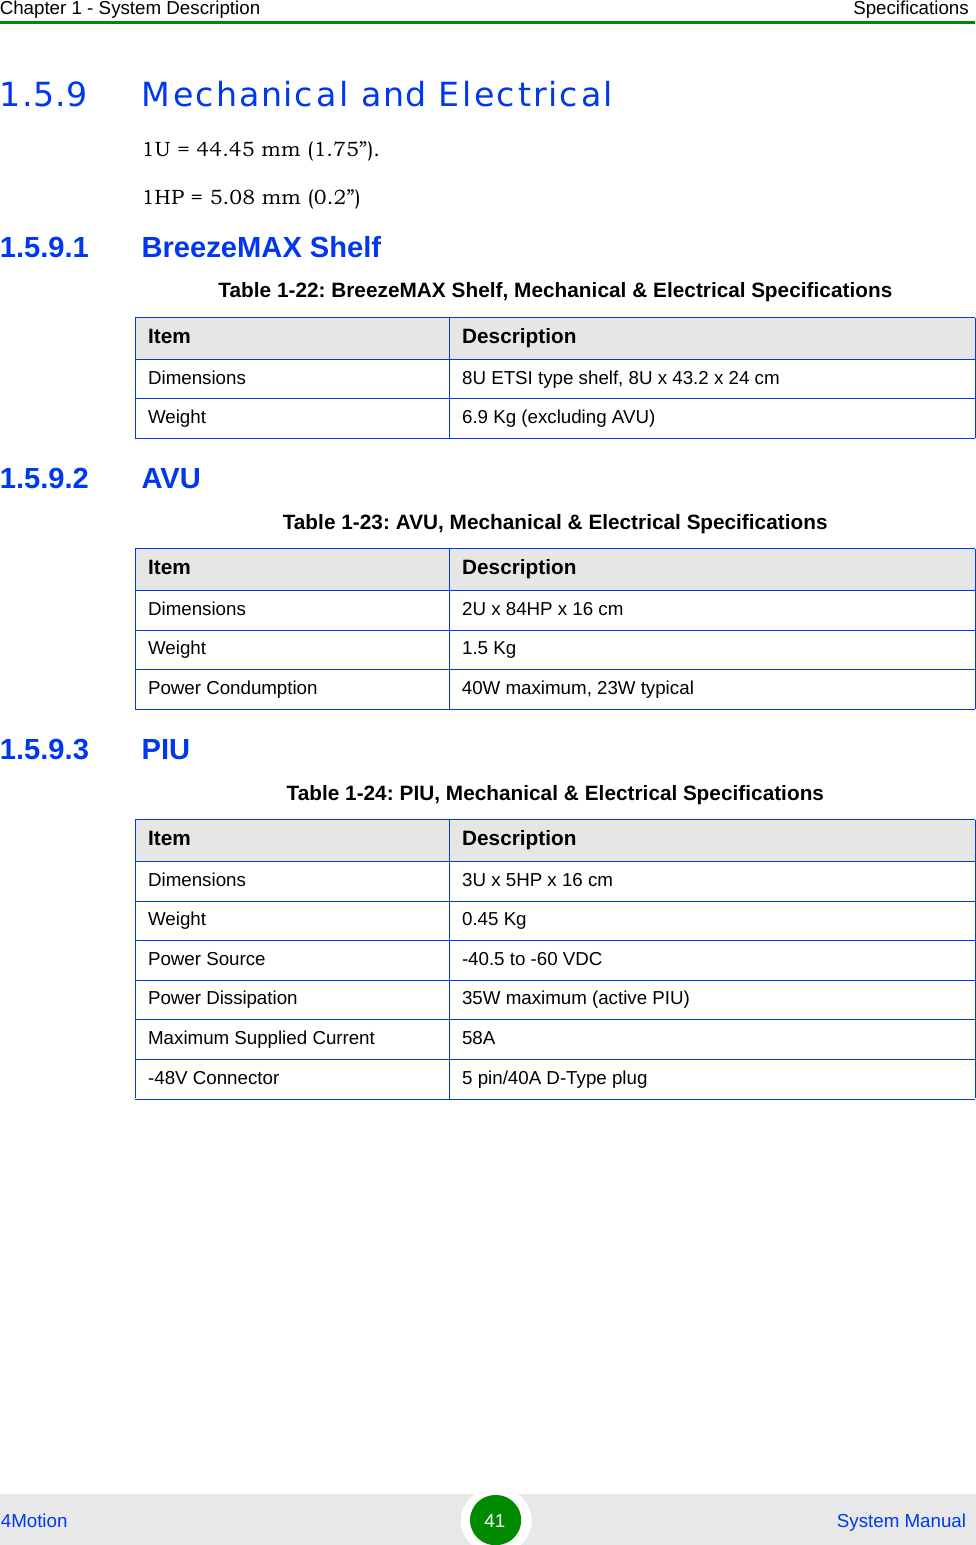 Chapter 1 - System Description Specifications4Motion 41  System Manual1.5.9 Mechanical and Electrical1U = 44.45 mm (1.75”).1HP = 5.08 mm (0.2”)1.5.9.1 BreezeMAX Shelf1.5.9.2 AVU1.5.9.3 PIUTable 1-22: BreezeMAX Shelf, Mechanical &amp; Electrical SpecificationsItem DescriptionDimensions 8U ETSI type shelf, 8U x 43.2 x 24 cmWeight 6.9 Kg (excluding AVU)Table 1-23: AVU, Mechanical &amp; Electrical SpecificationsItem DescriptionDimensions 2U x 84HP x 16 cmWeight 1.5 KgPower Condumption 40W maximum, 23W typicalTable 1-24: PIU, Mechanical &amp; Electrical SpecificationsItem DescriptionDimensions 3U x 5HP x 16 cmWeight 0.45 KgPower Source -40.5 to -60 VDCPower Dissipation 35W maximum (active PIU)Maximum Supplied Current 58A-48V Connector 5 pin/40A D-Type plug